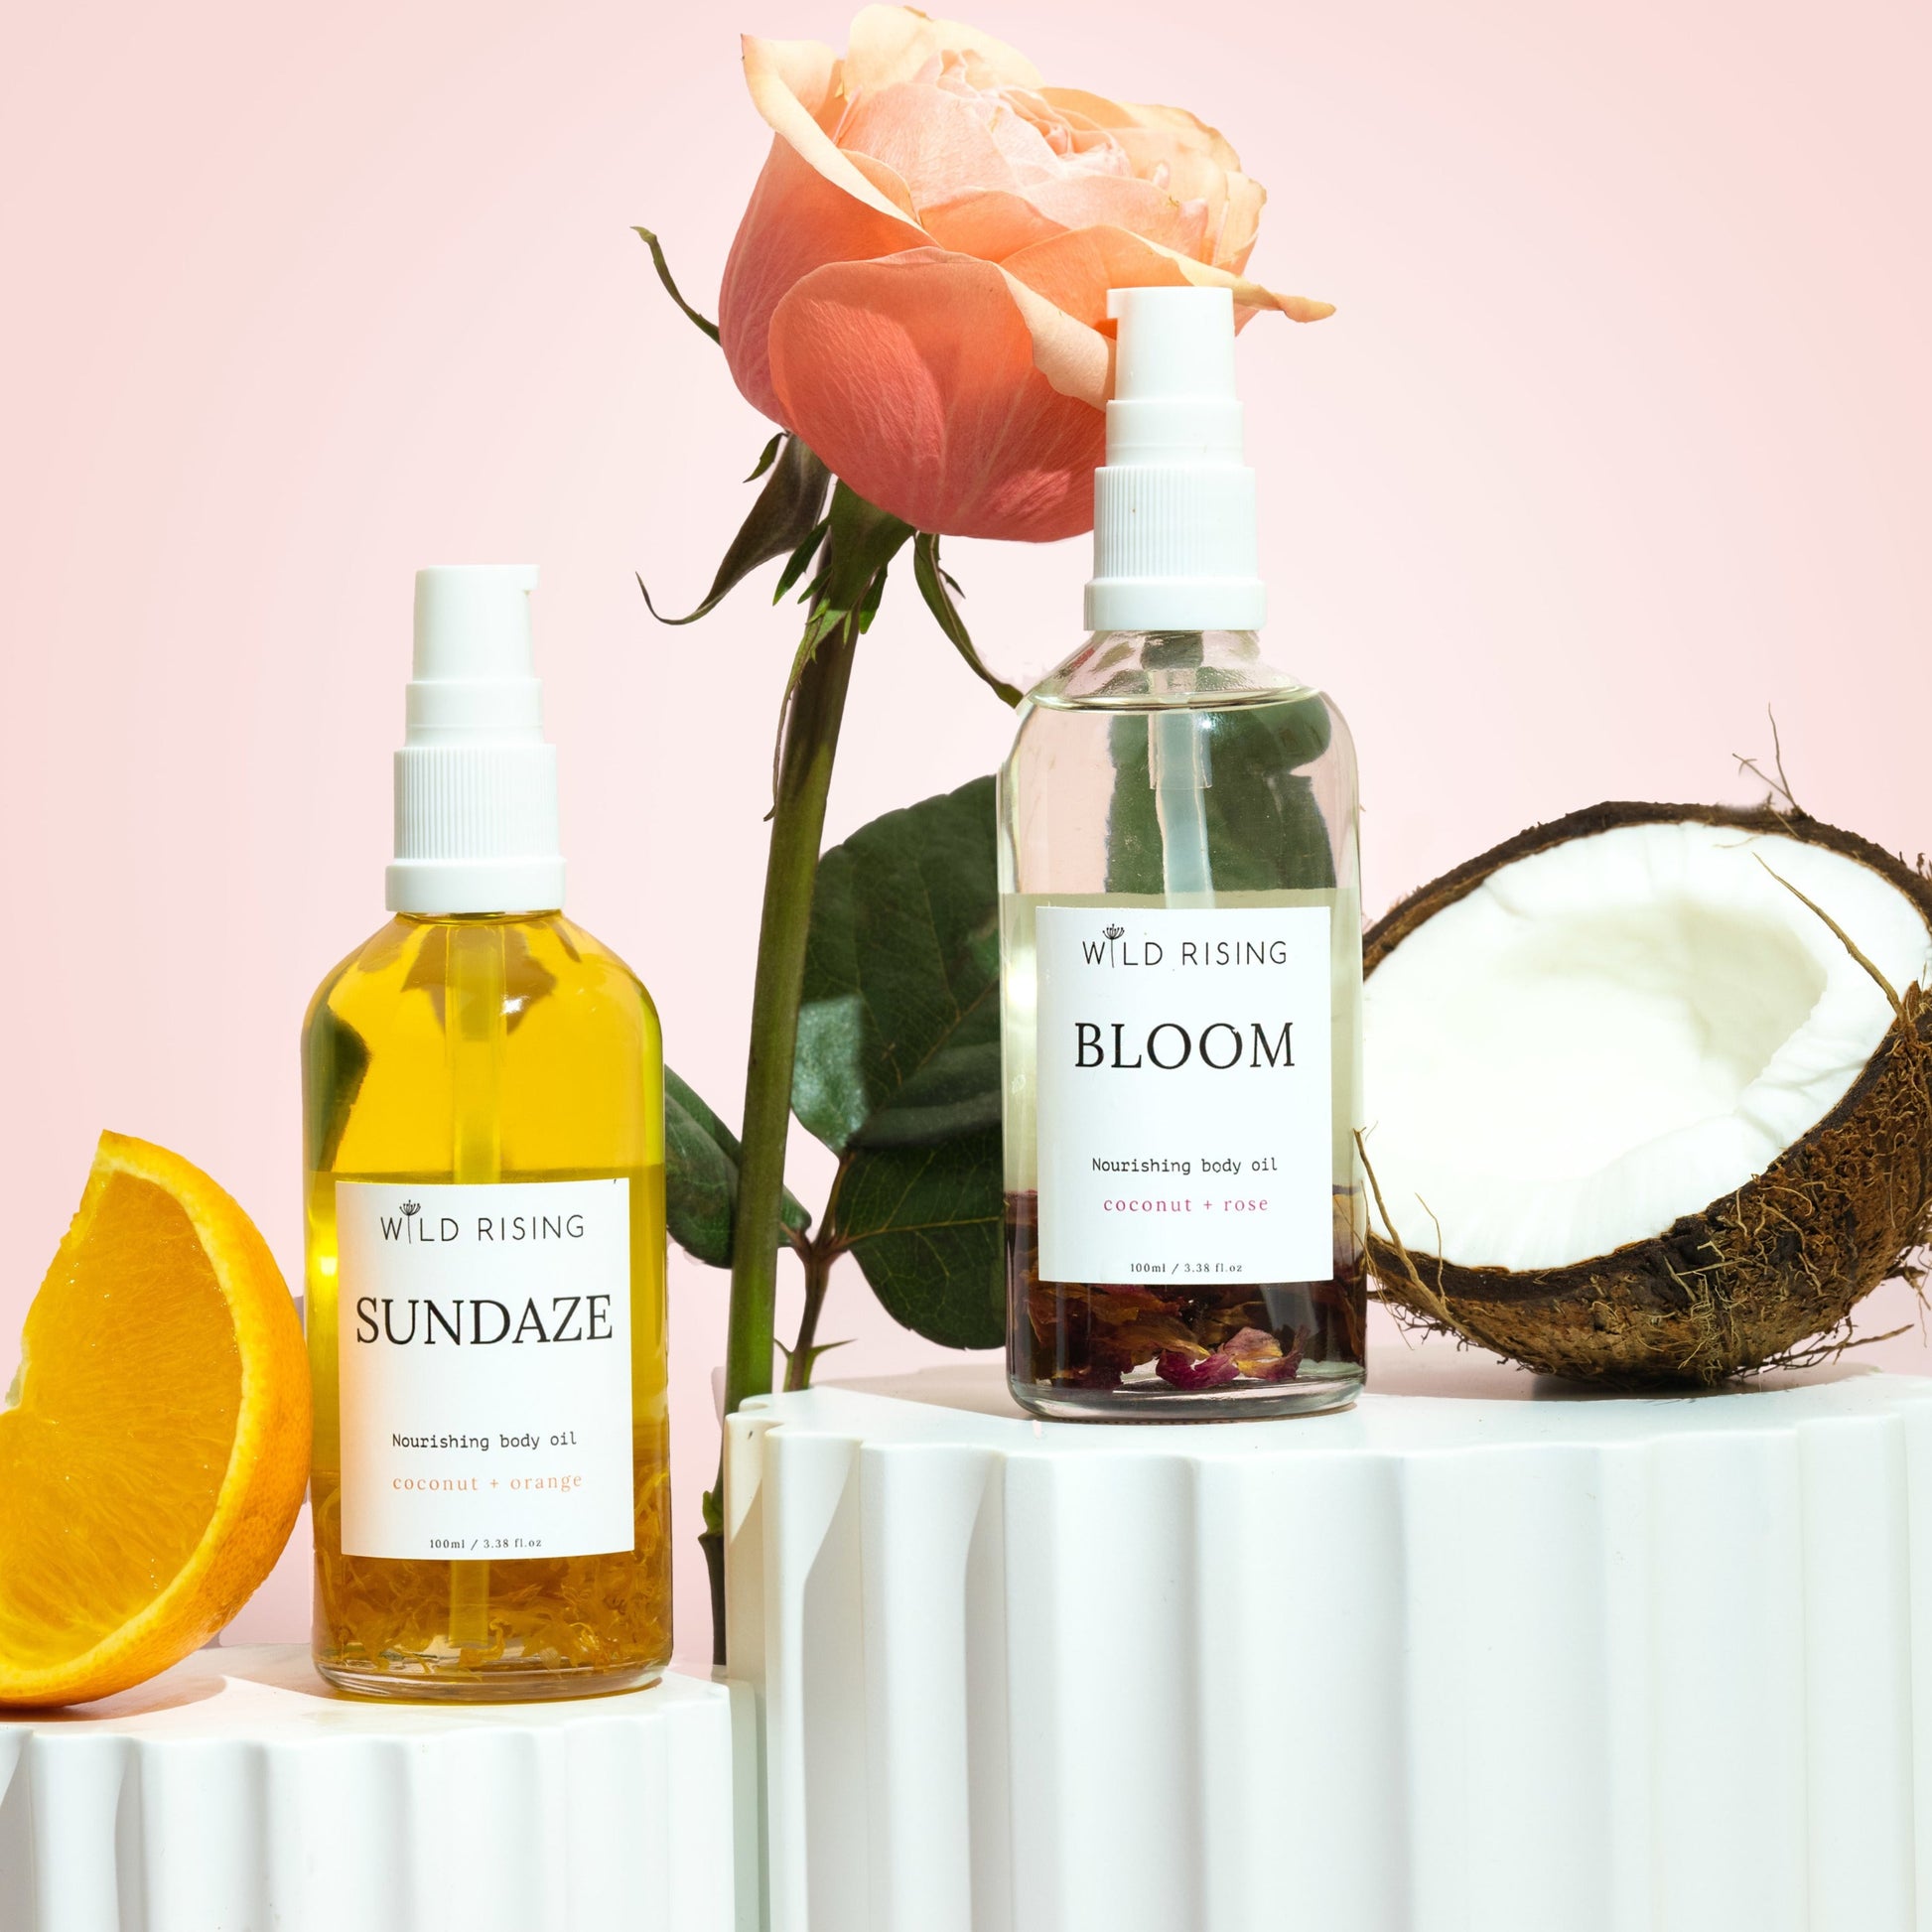 Sundaze body oil with bloom